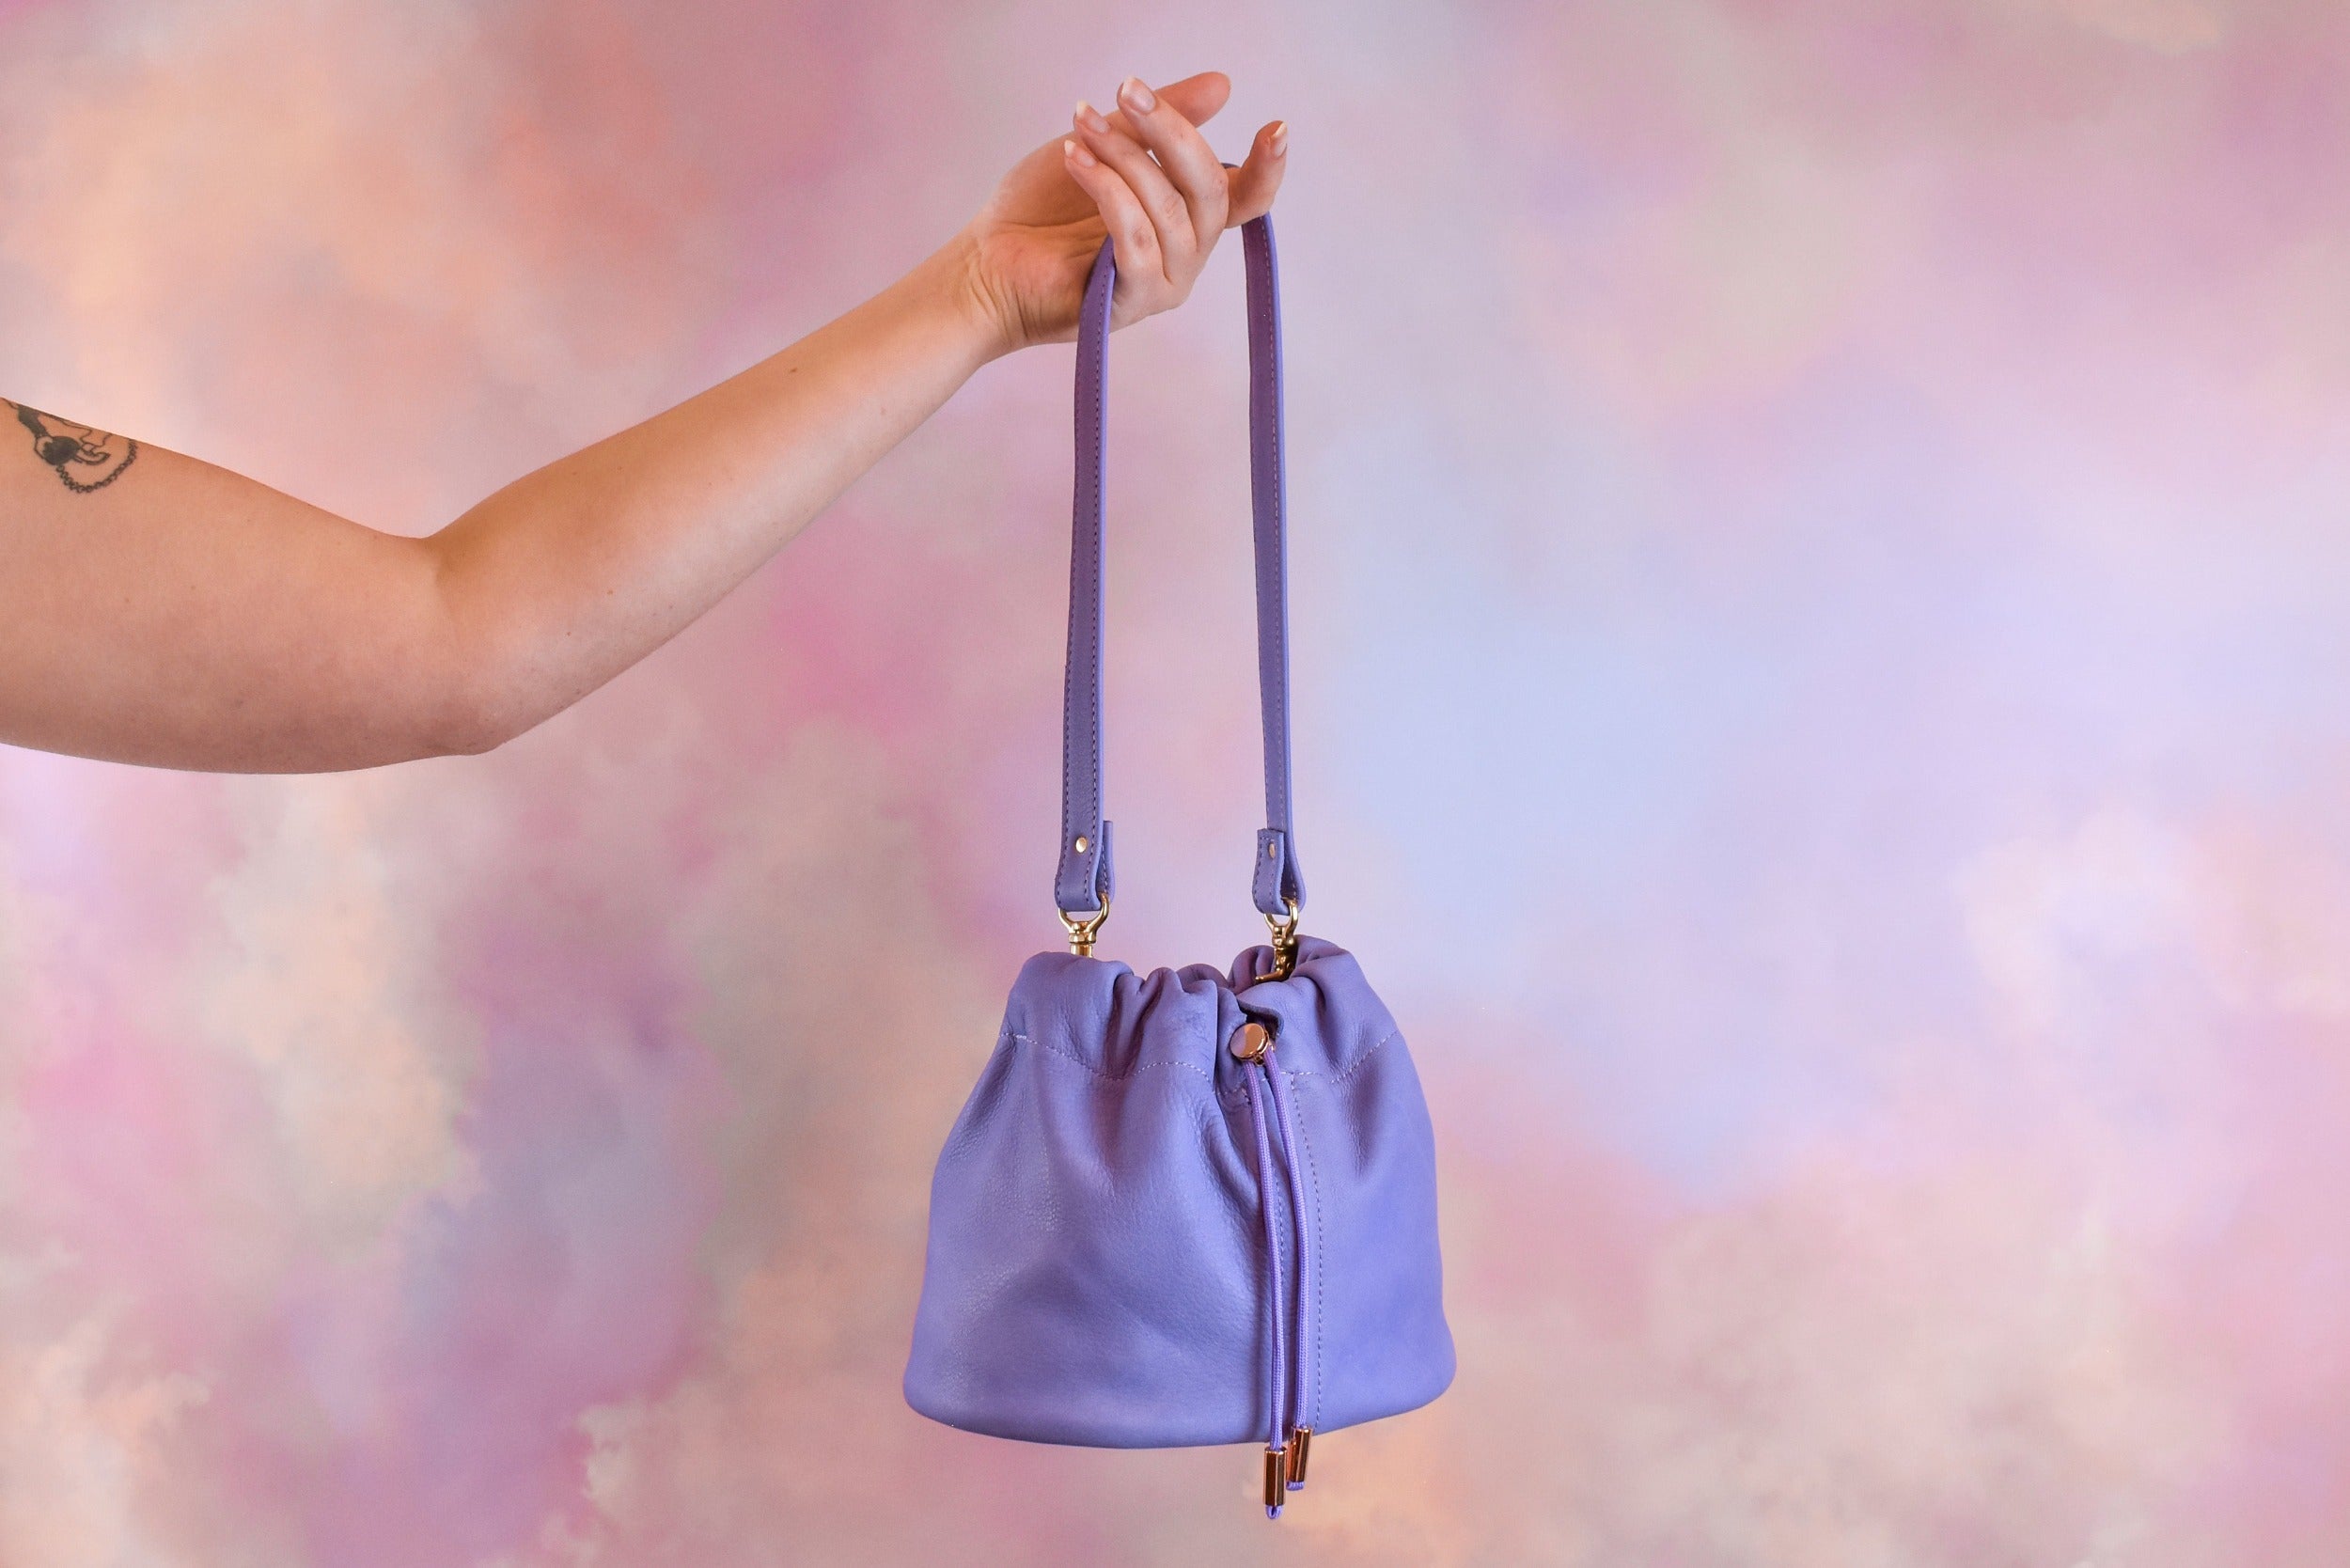 light purple nubuck leather shoulder bag hanging from hand